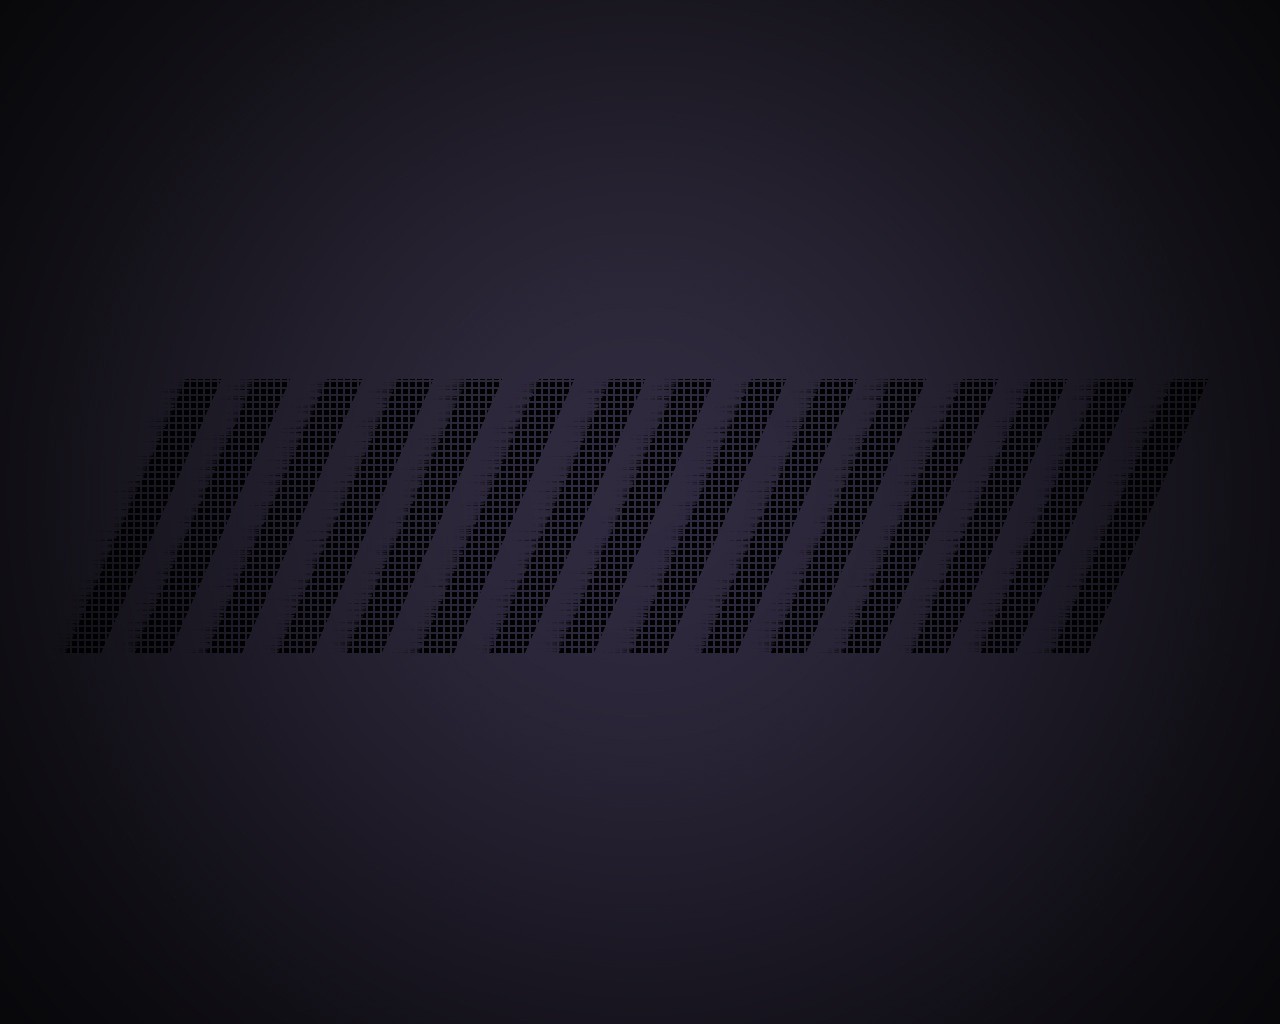 General 1280x1024 minimalism simple background texture purple background